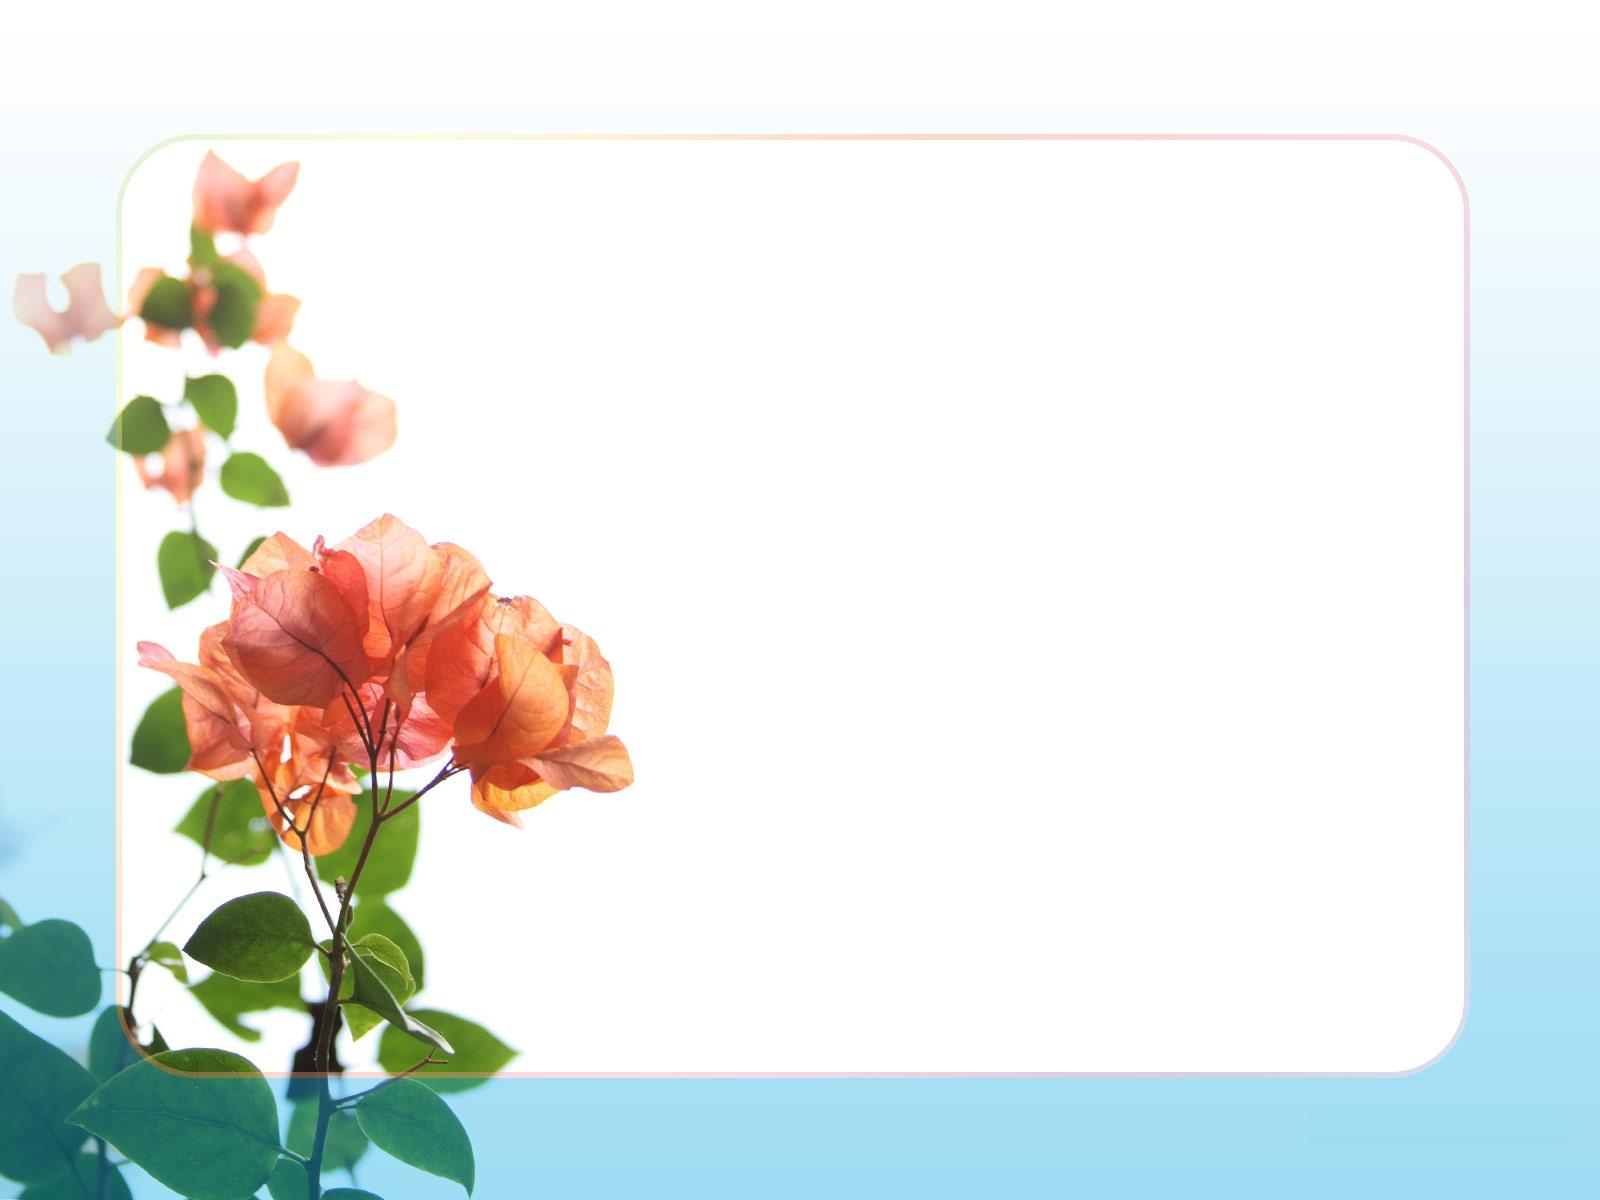 Free Flower Border Image, Download Free Clip Art, Free Clip Art